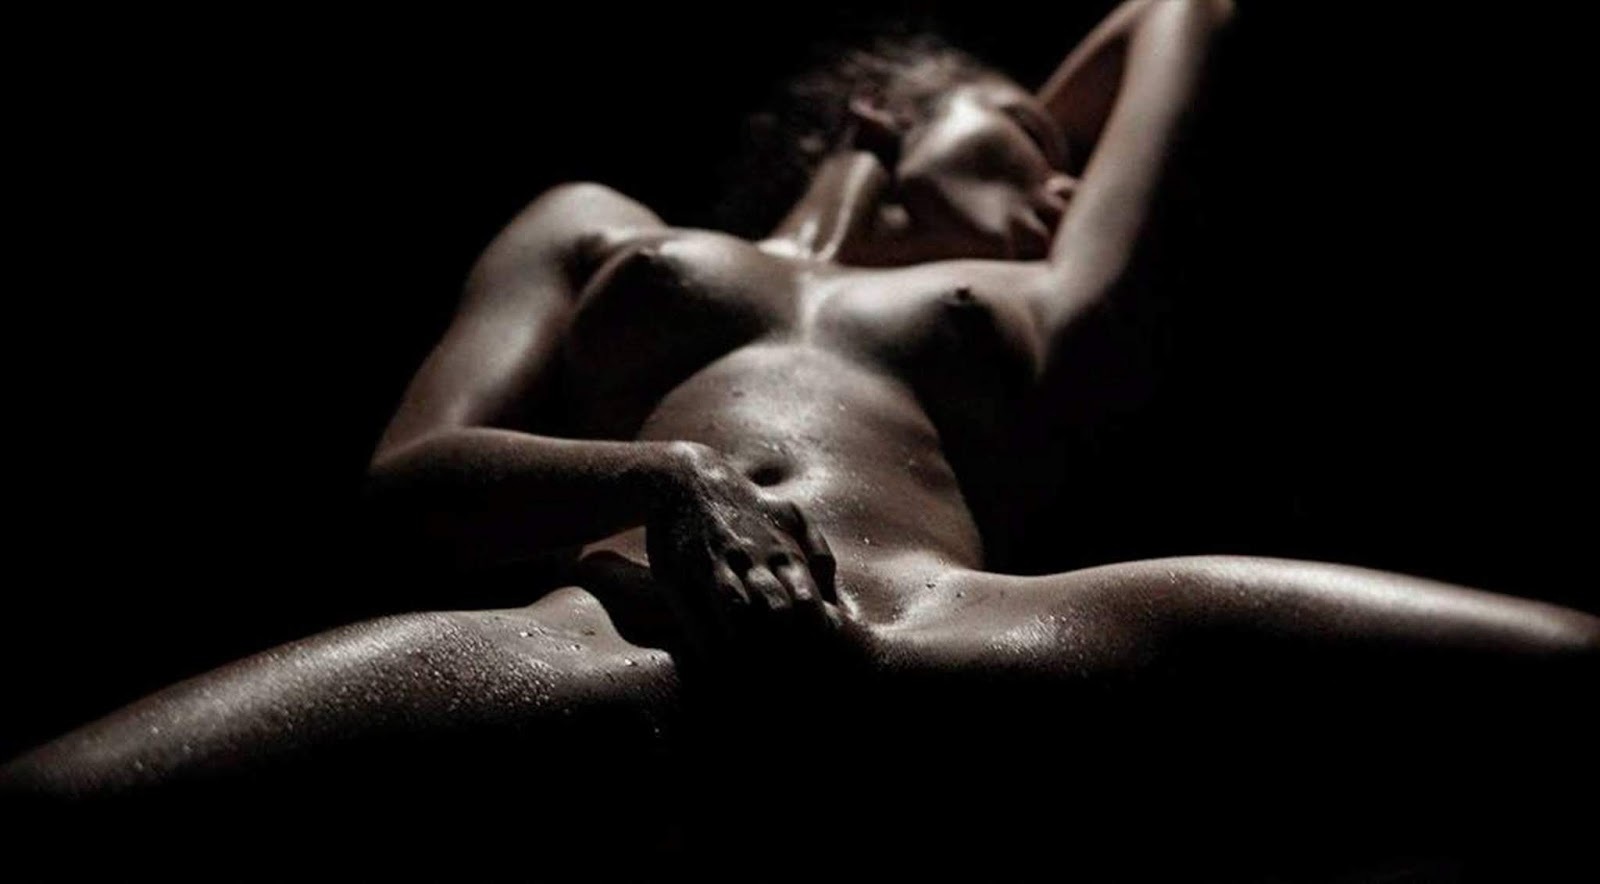 Erotic explicit photography